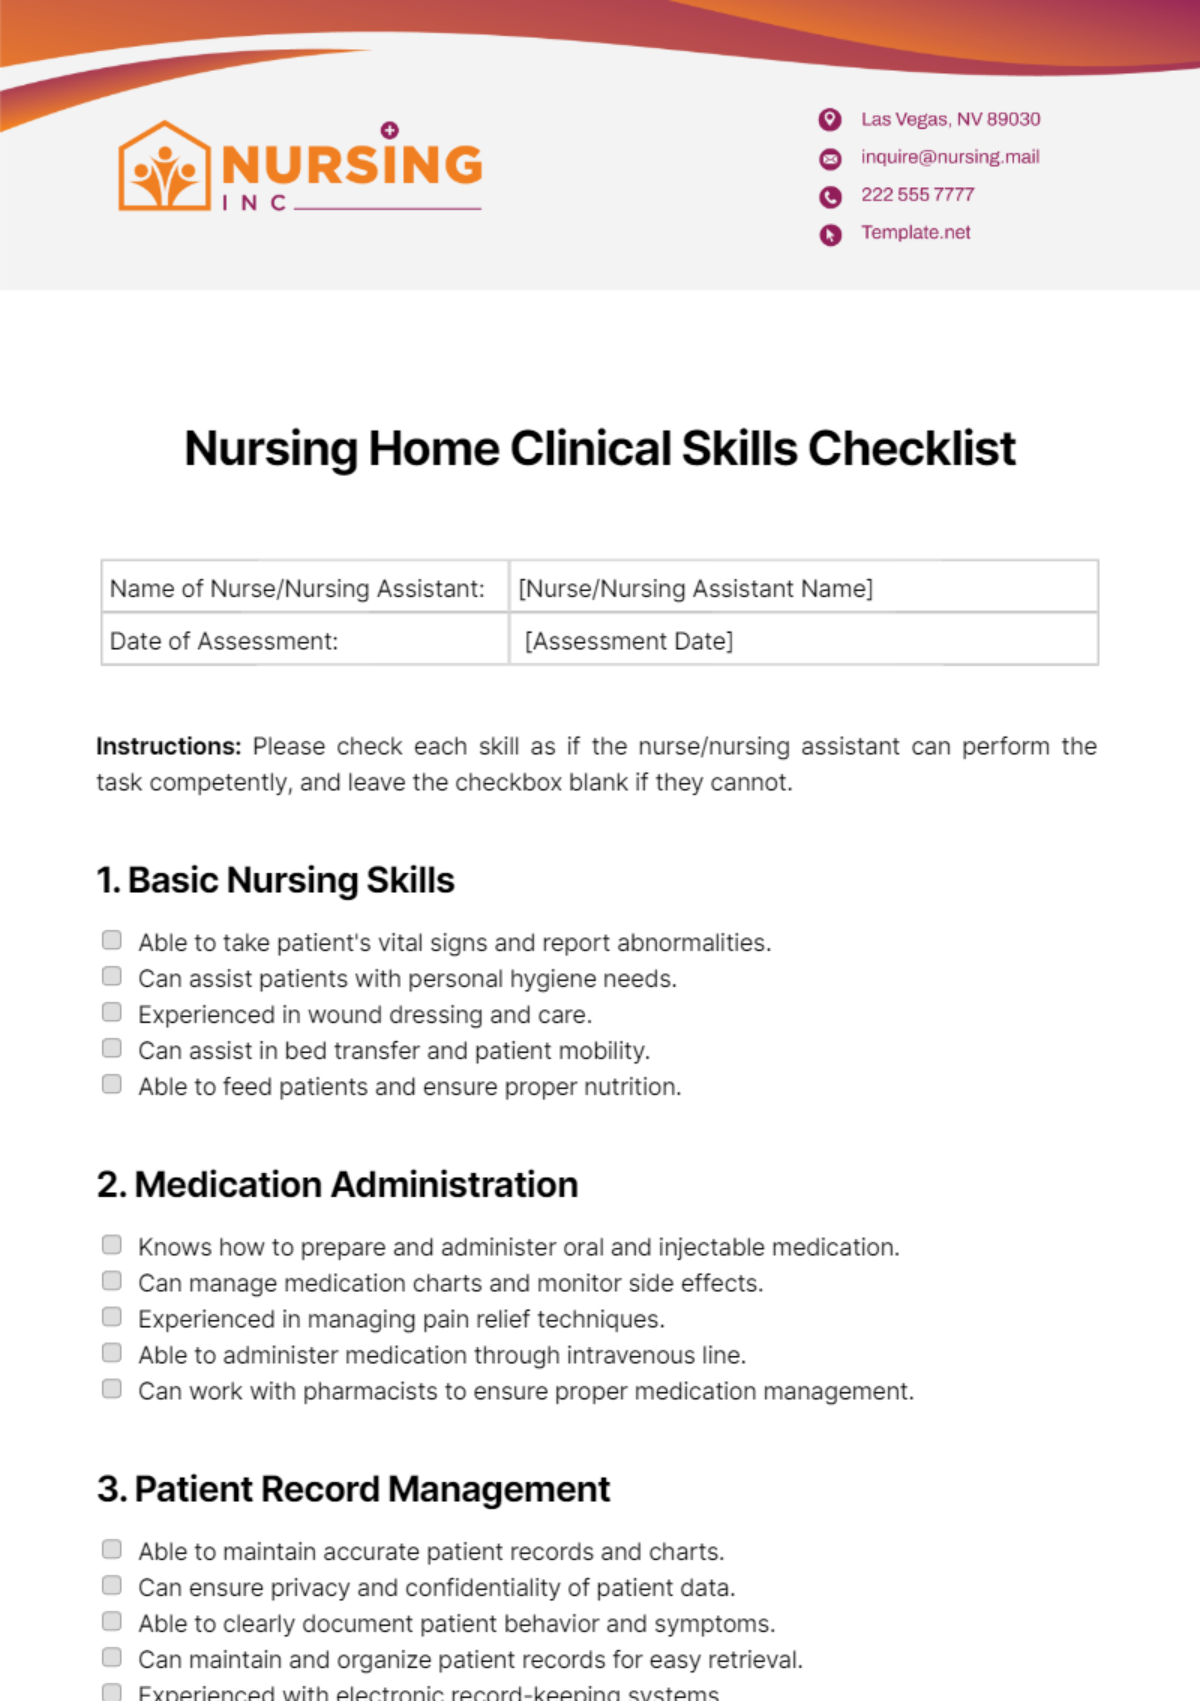 Nursing Home Clinical Skills Checklist Template